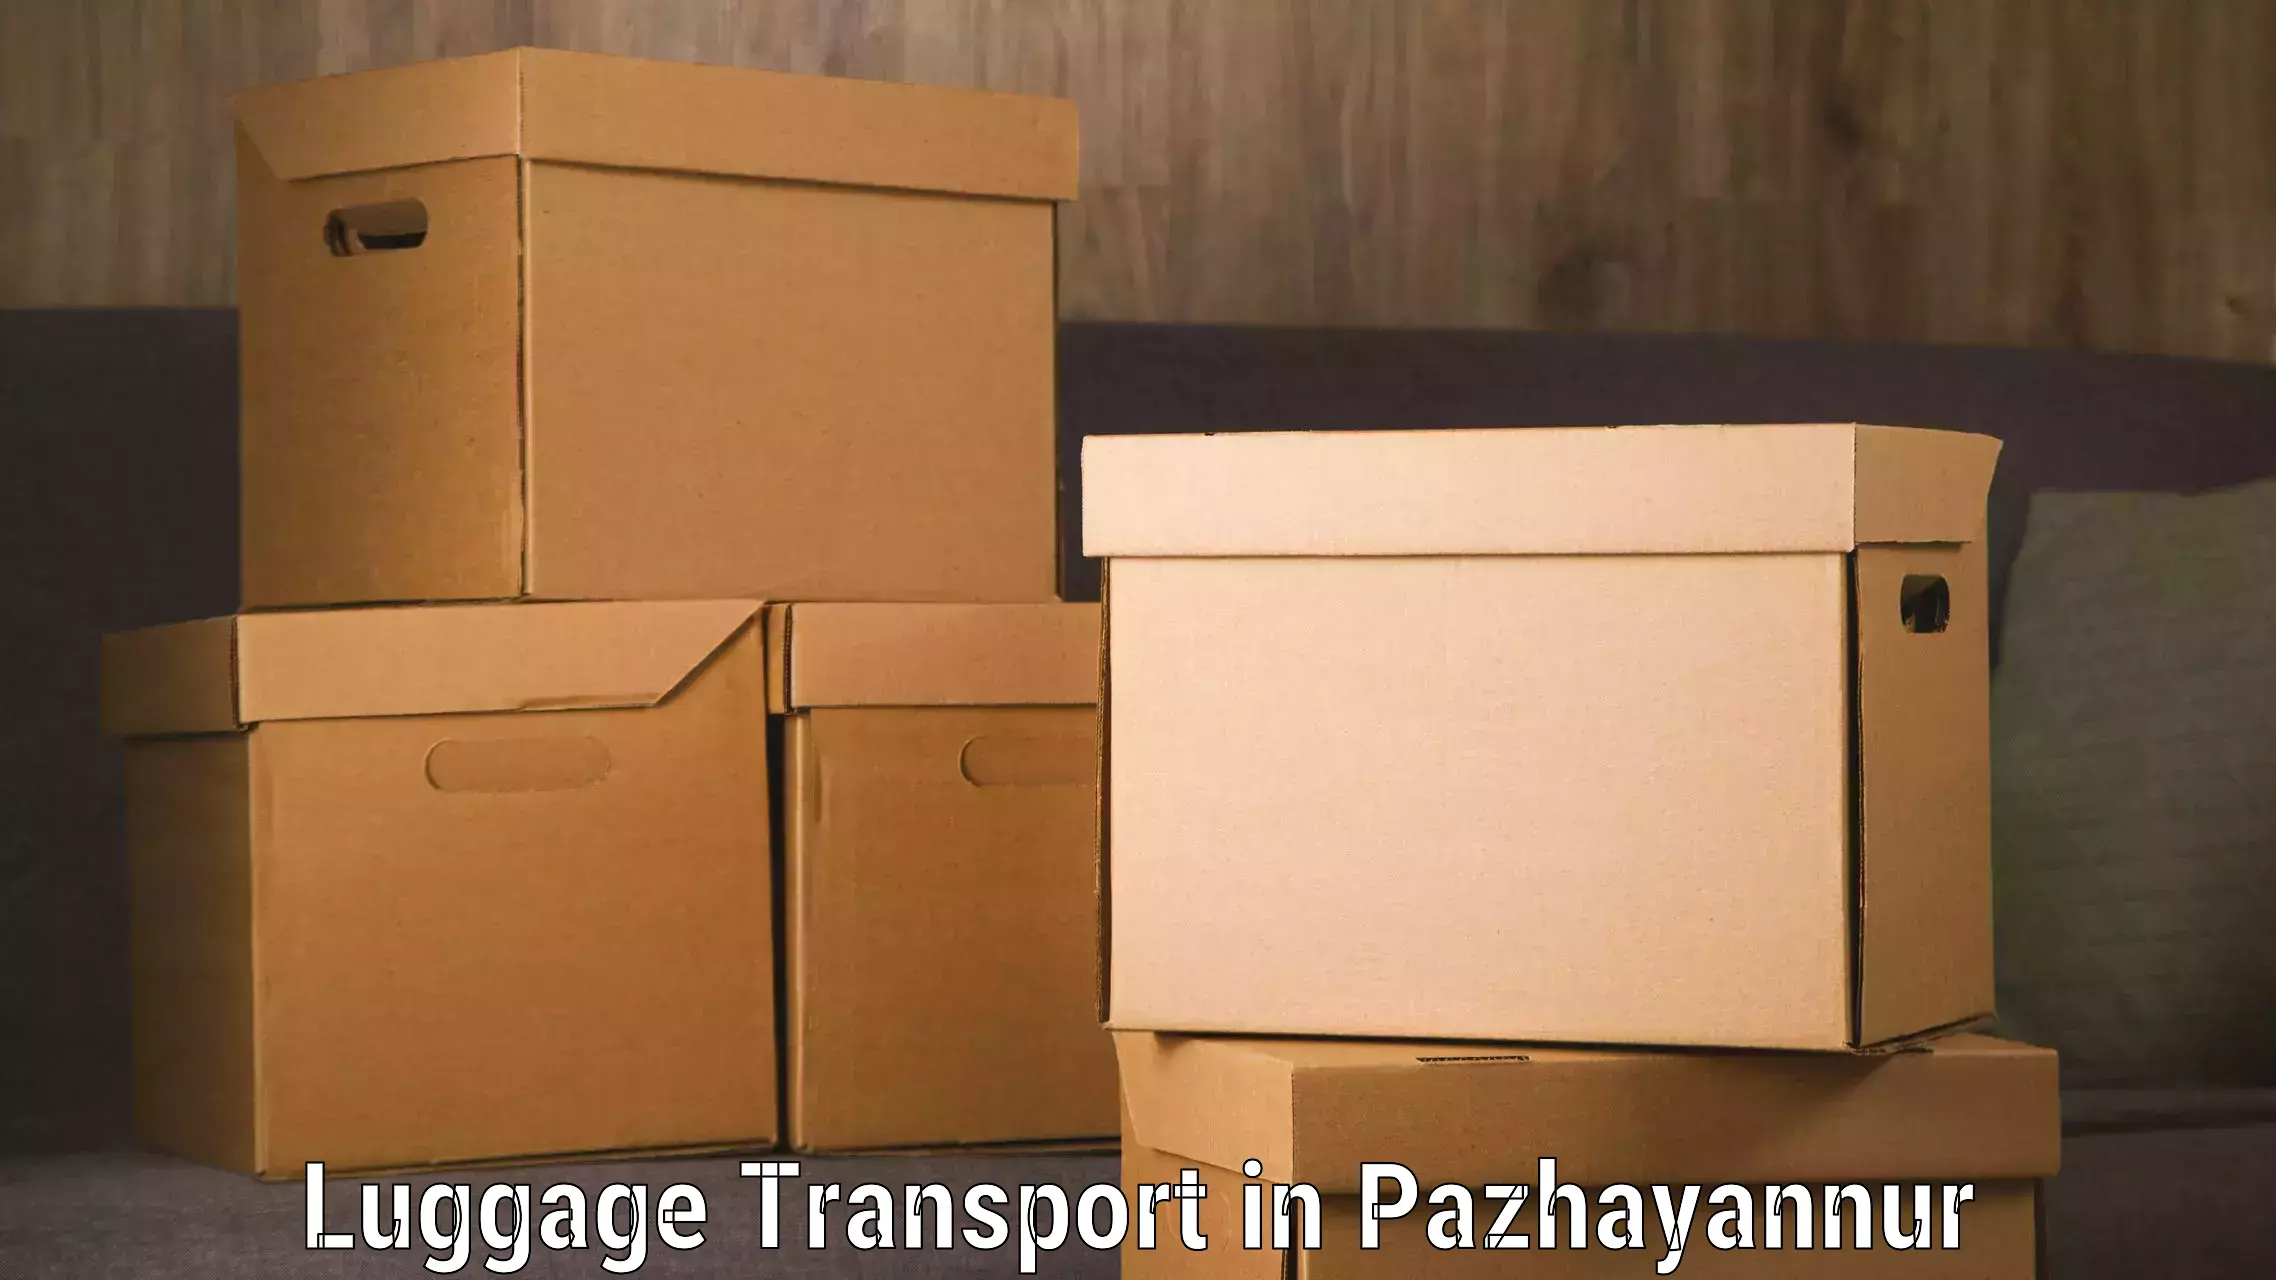 Unaccompanied luggage service in Pazhayannur